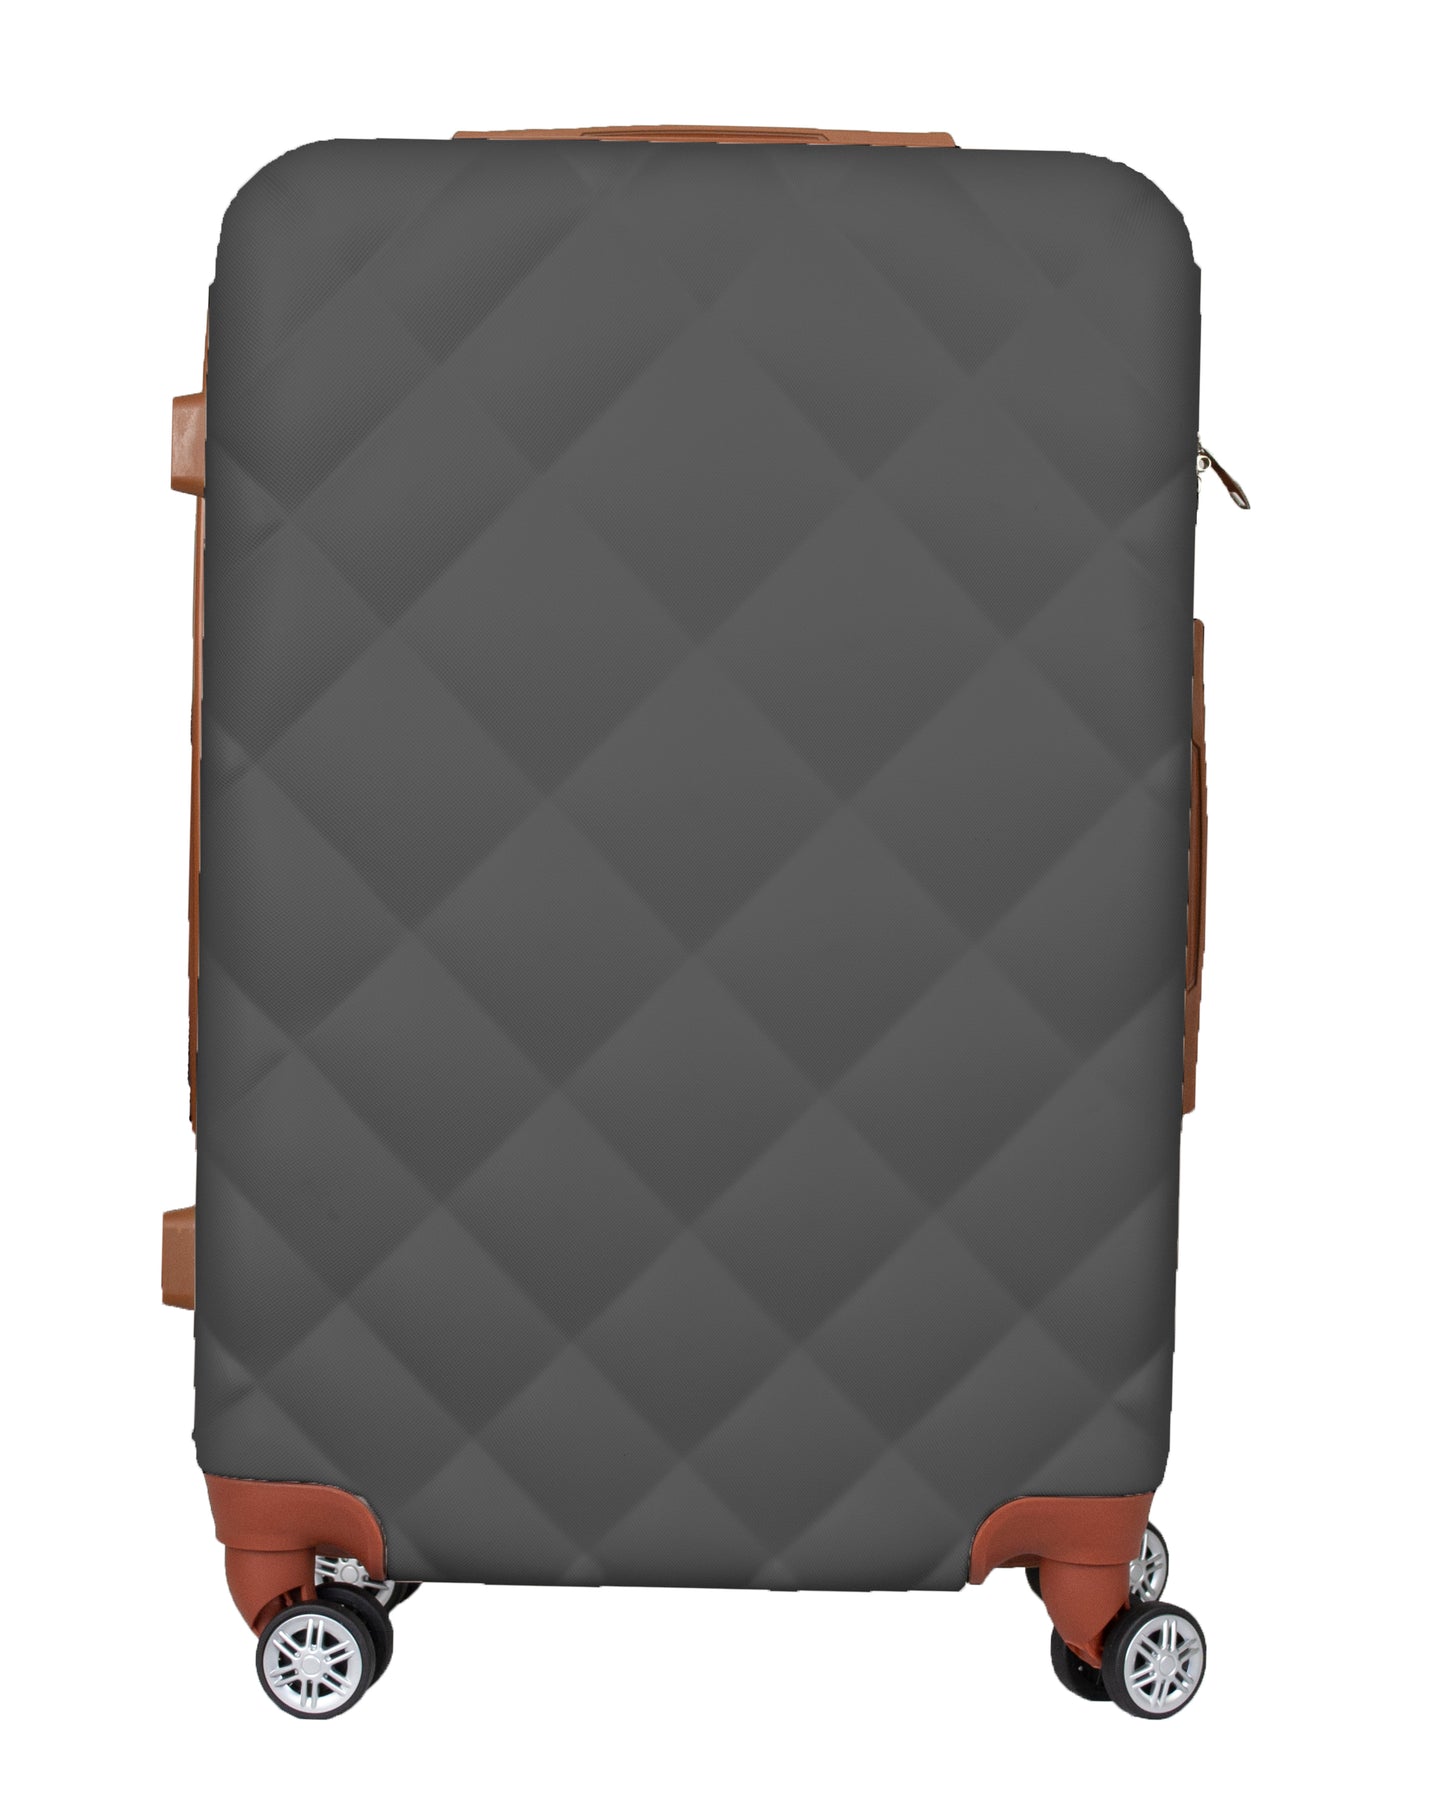 Hard Shell Luggage with 4 Spinner Wheels, Dark Grey